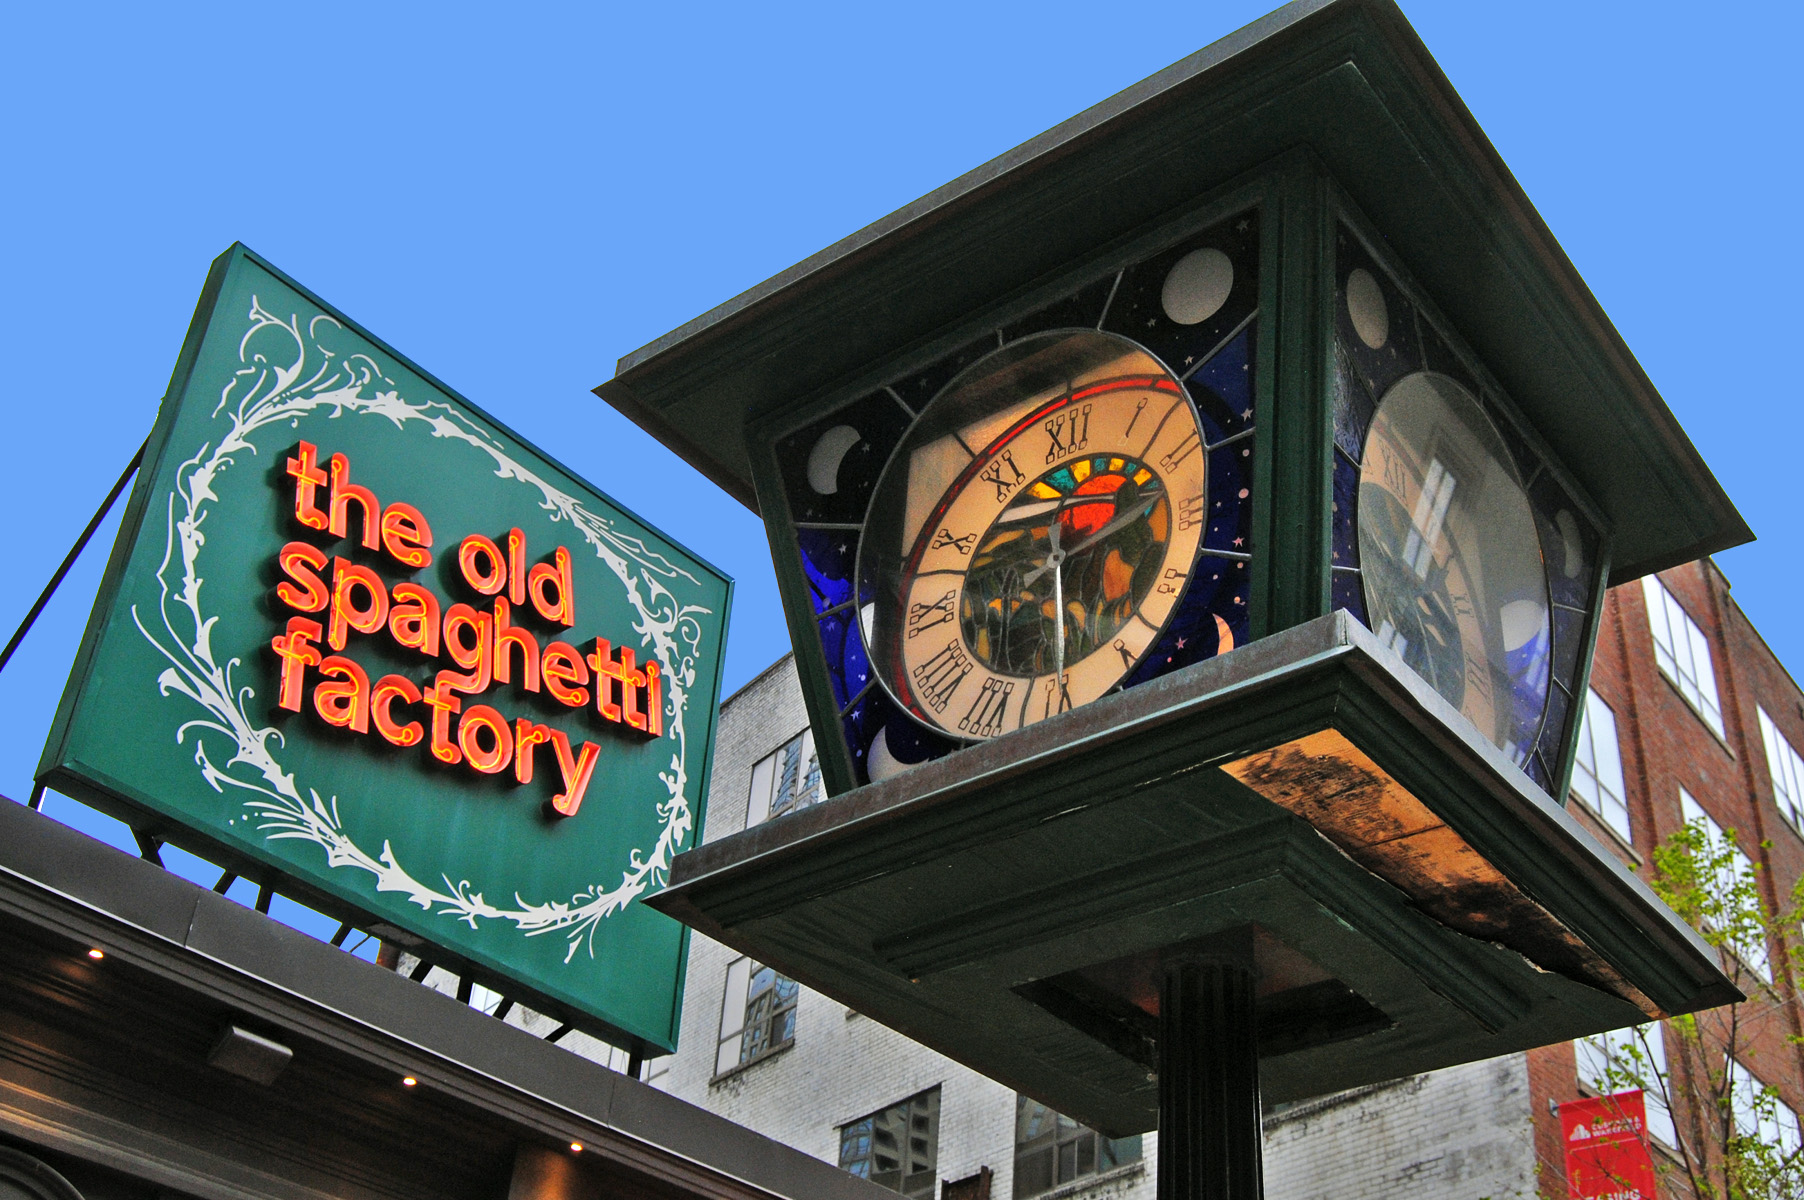 the old spaghetti factory-sign clock.jpg